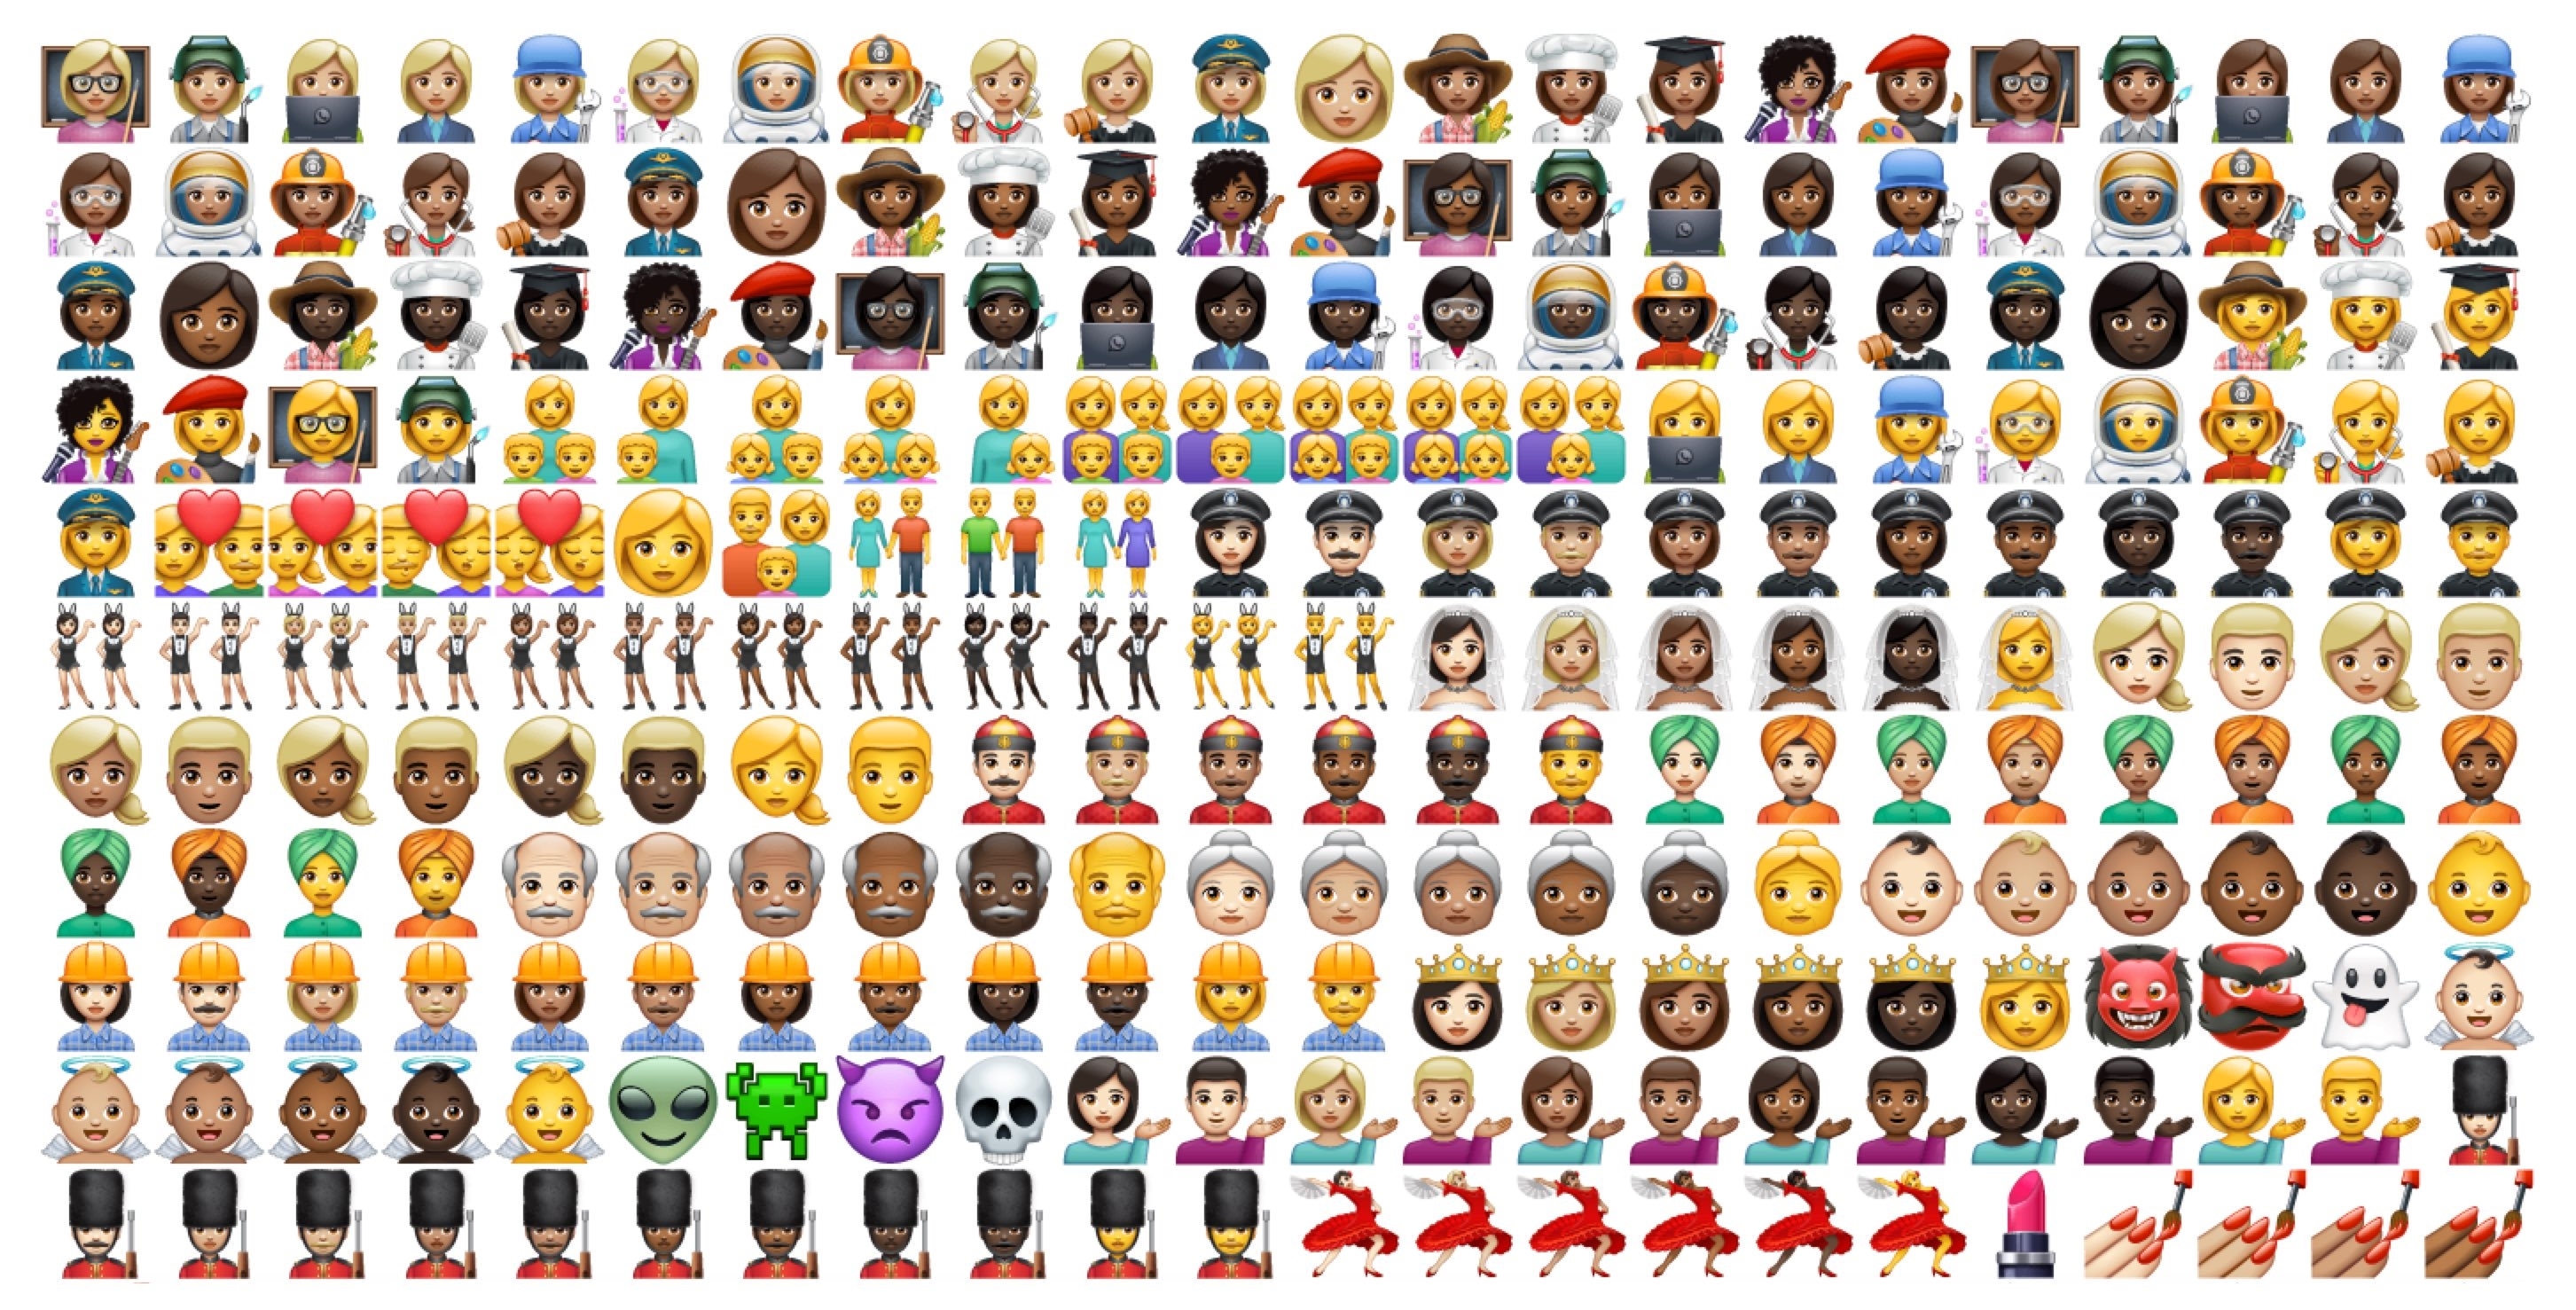 WhatsApp's new universal emoji set looks very familiar | DeviceDaily.com